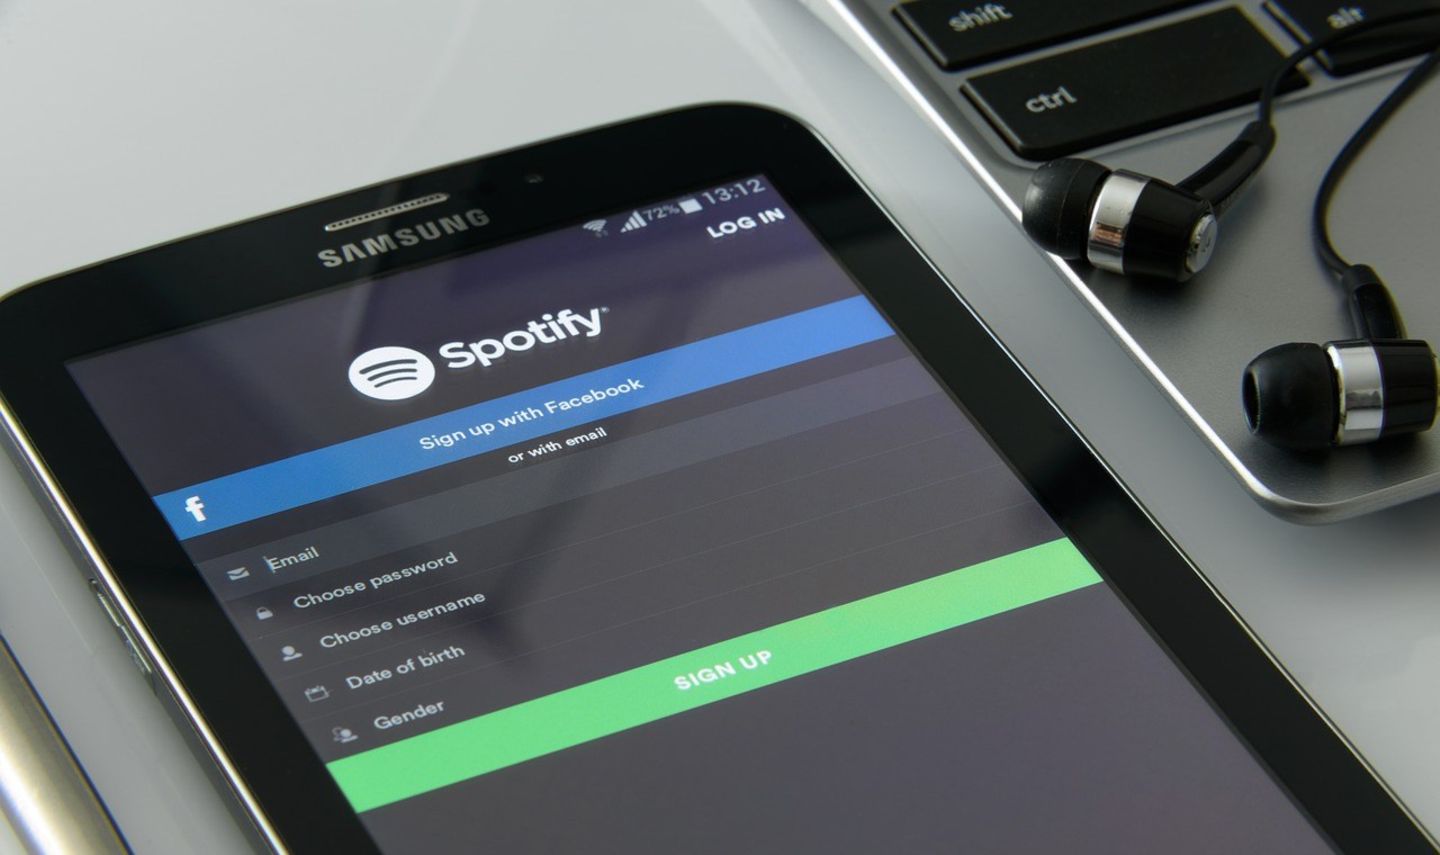 Das Geschäft um Streaming-Anbieter wie Spotify boomt